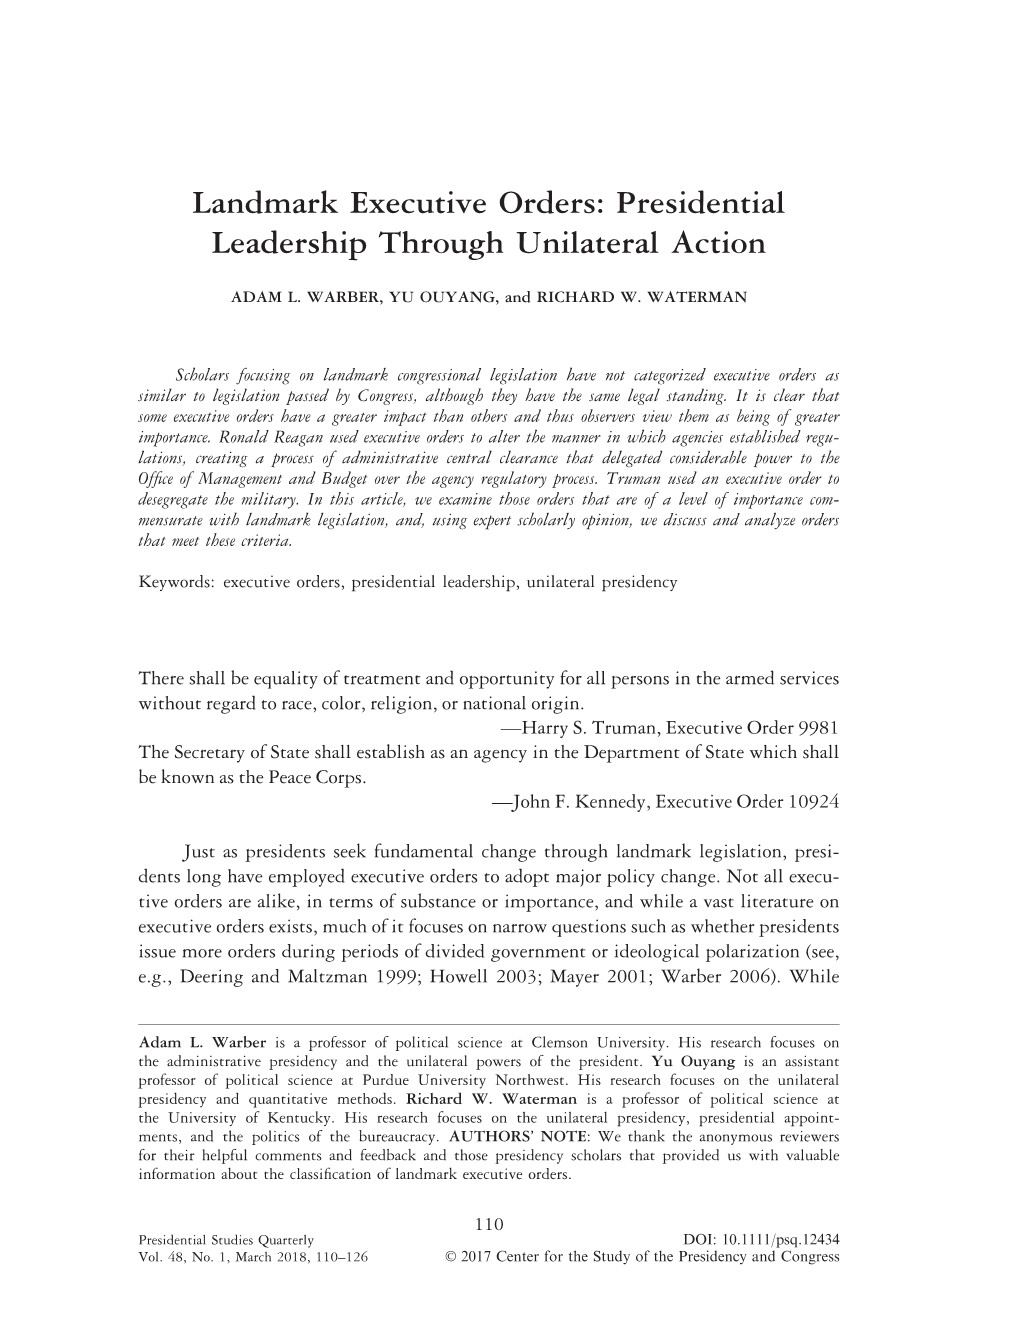 Landmark Executive Orders: Presidential Leadership Through Unilateral Action